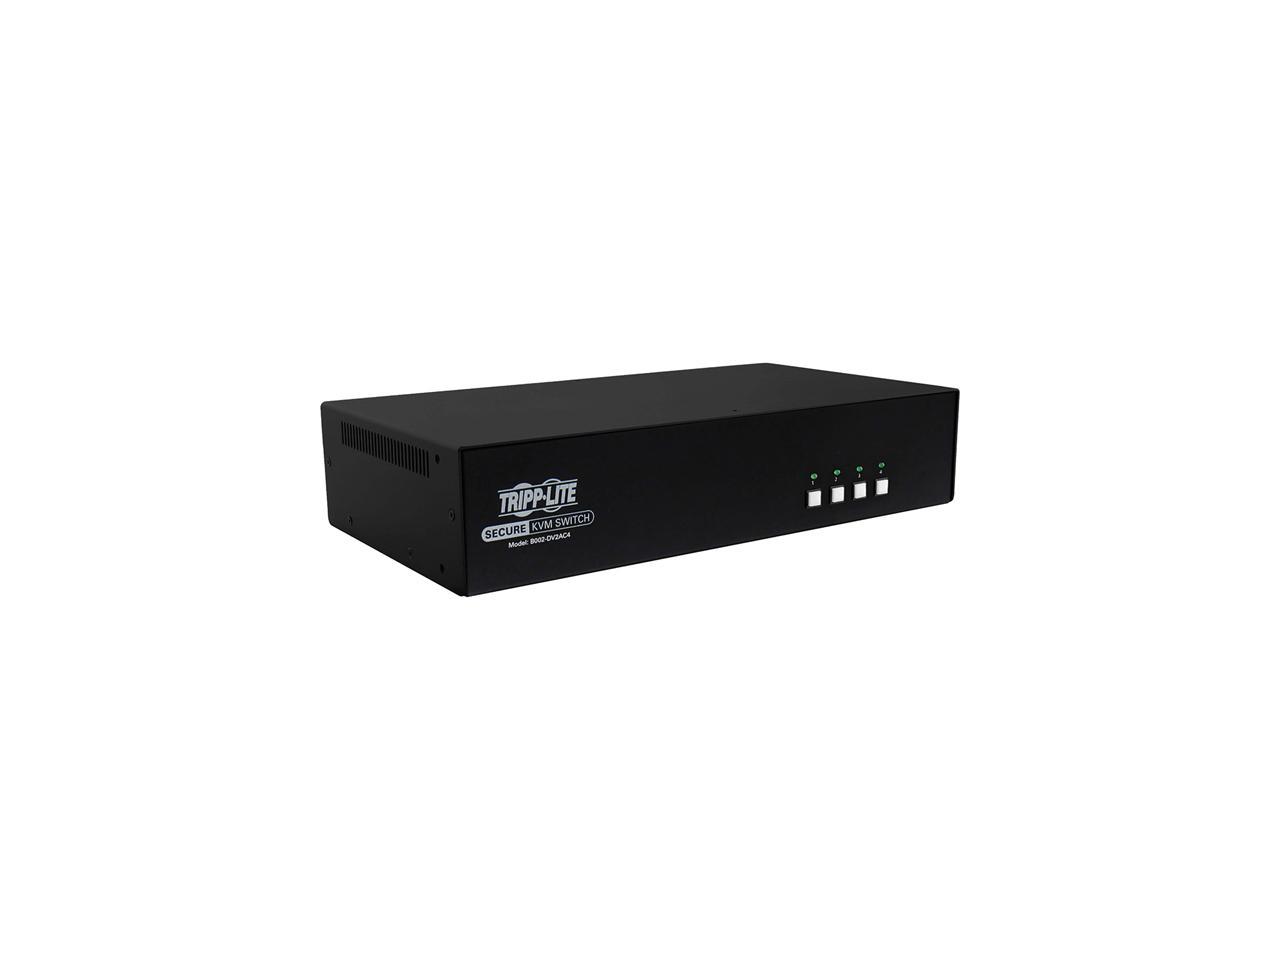 Tripp Lite 4 Port Secure KVM Switch, DVI to DVI, Dual Monitor, NIAP PP3.0 Certified, Audio, Common Access Card, TAA-Compliant (B002-DV2AC4)